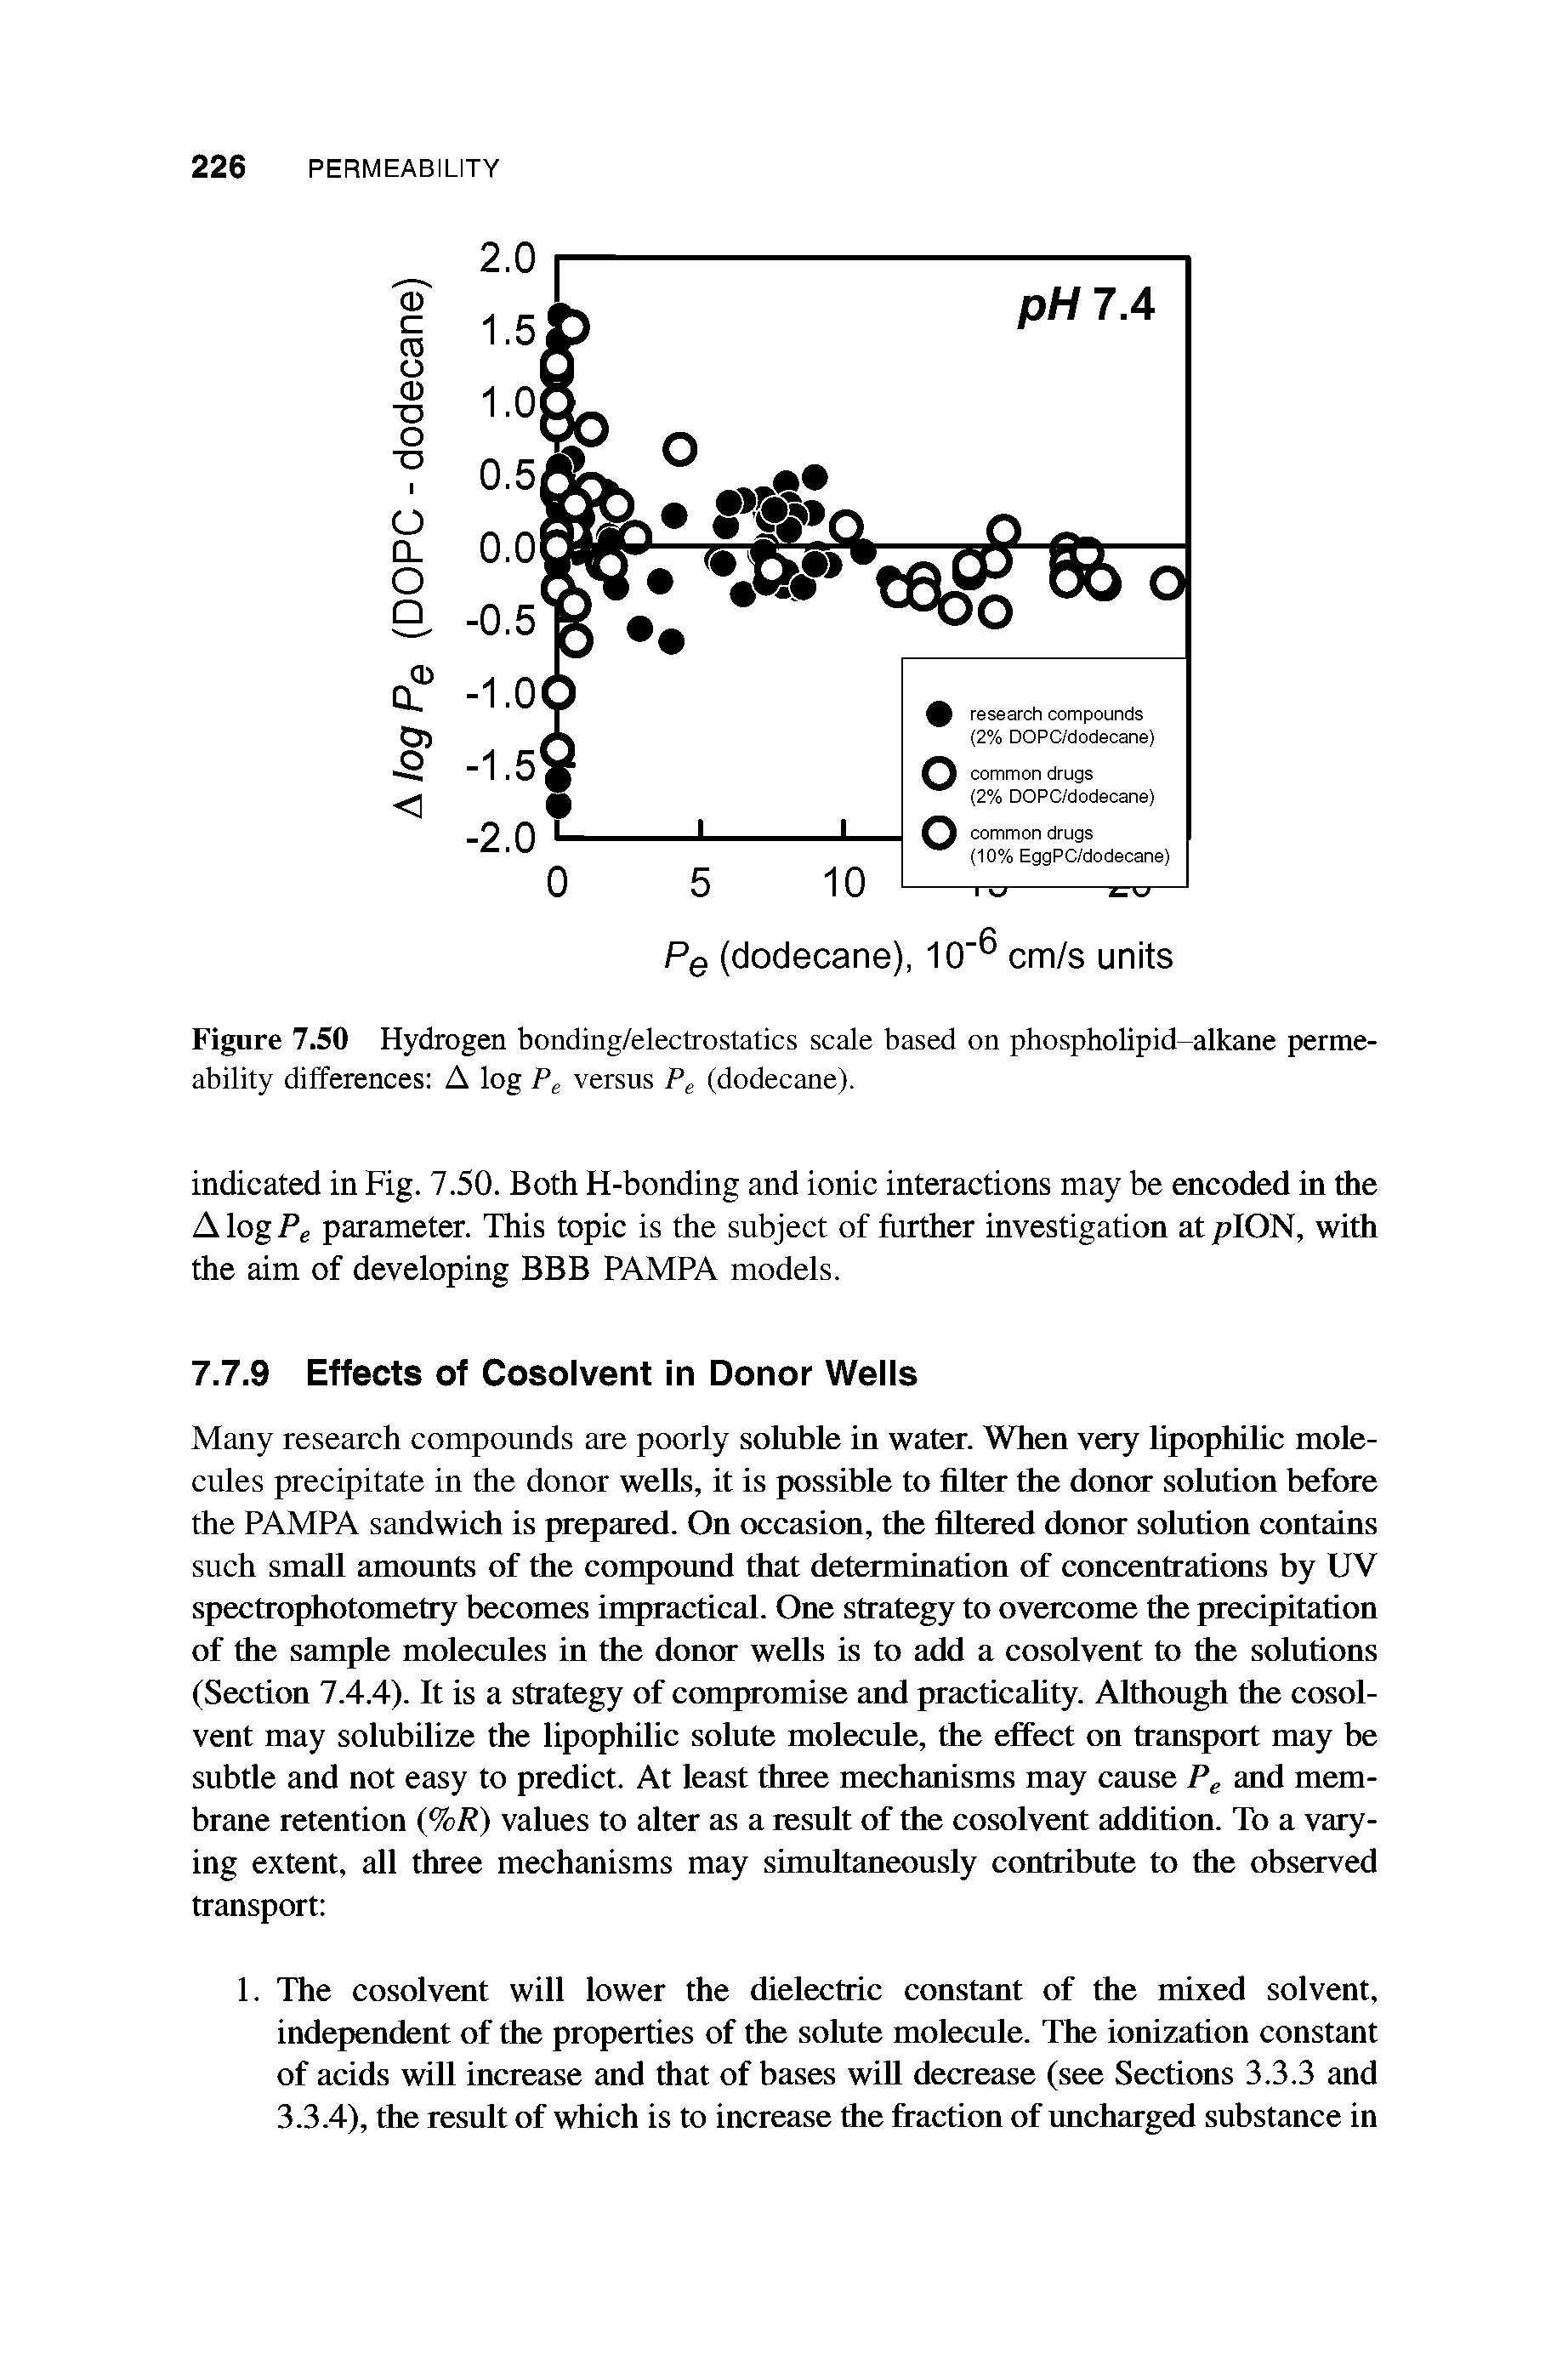 Figure 7.50 Hydrogen bonding/electrostatics scale based on phospholipid-alkane permeability differences A log Pe versus Pe (dodecane).